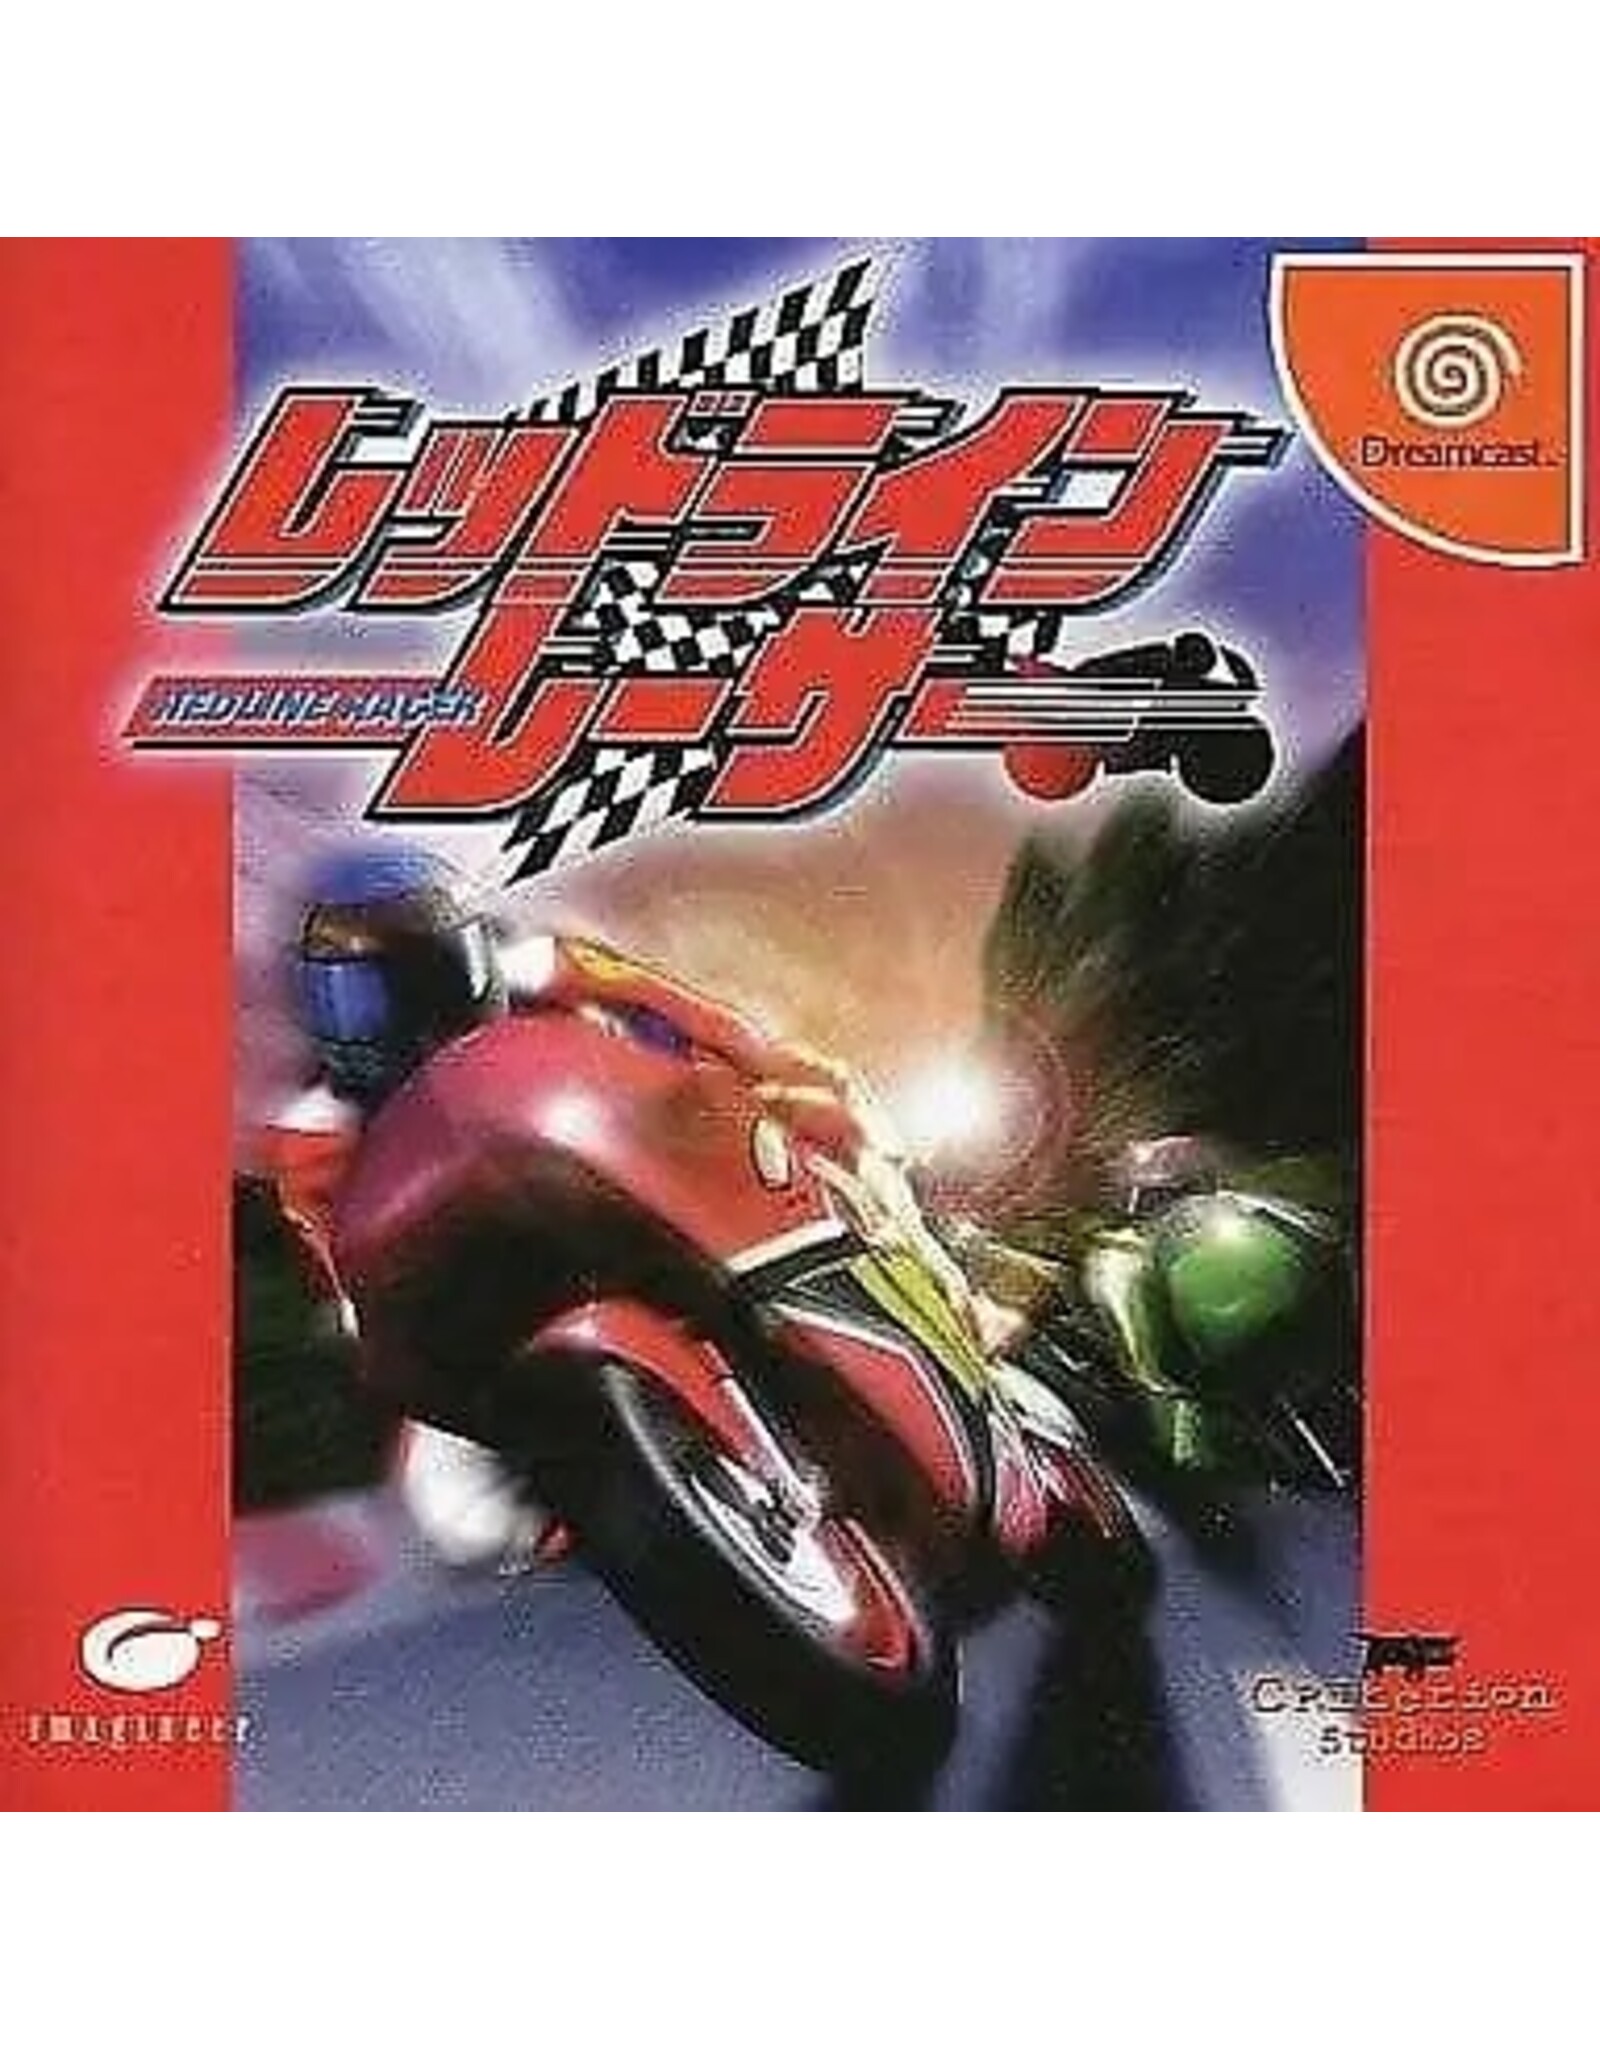 Sega Dreamcast Redline Racer (CiB, Missing Obi Strip, JP Import)